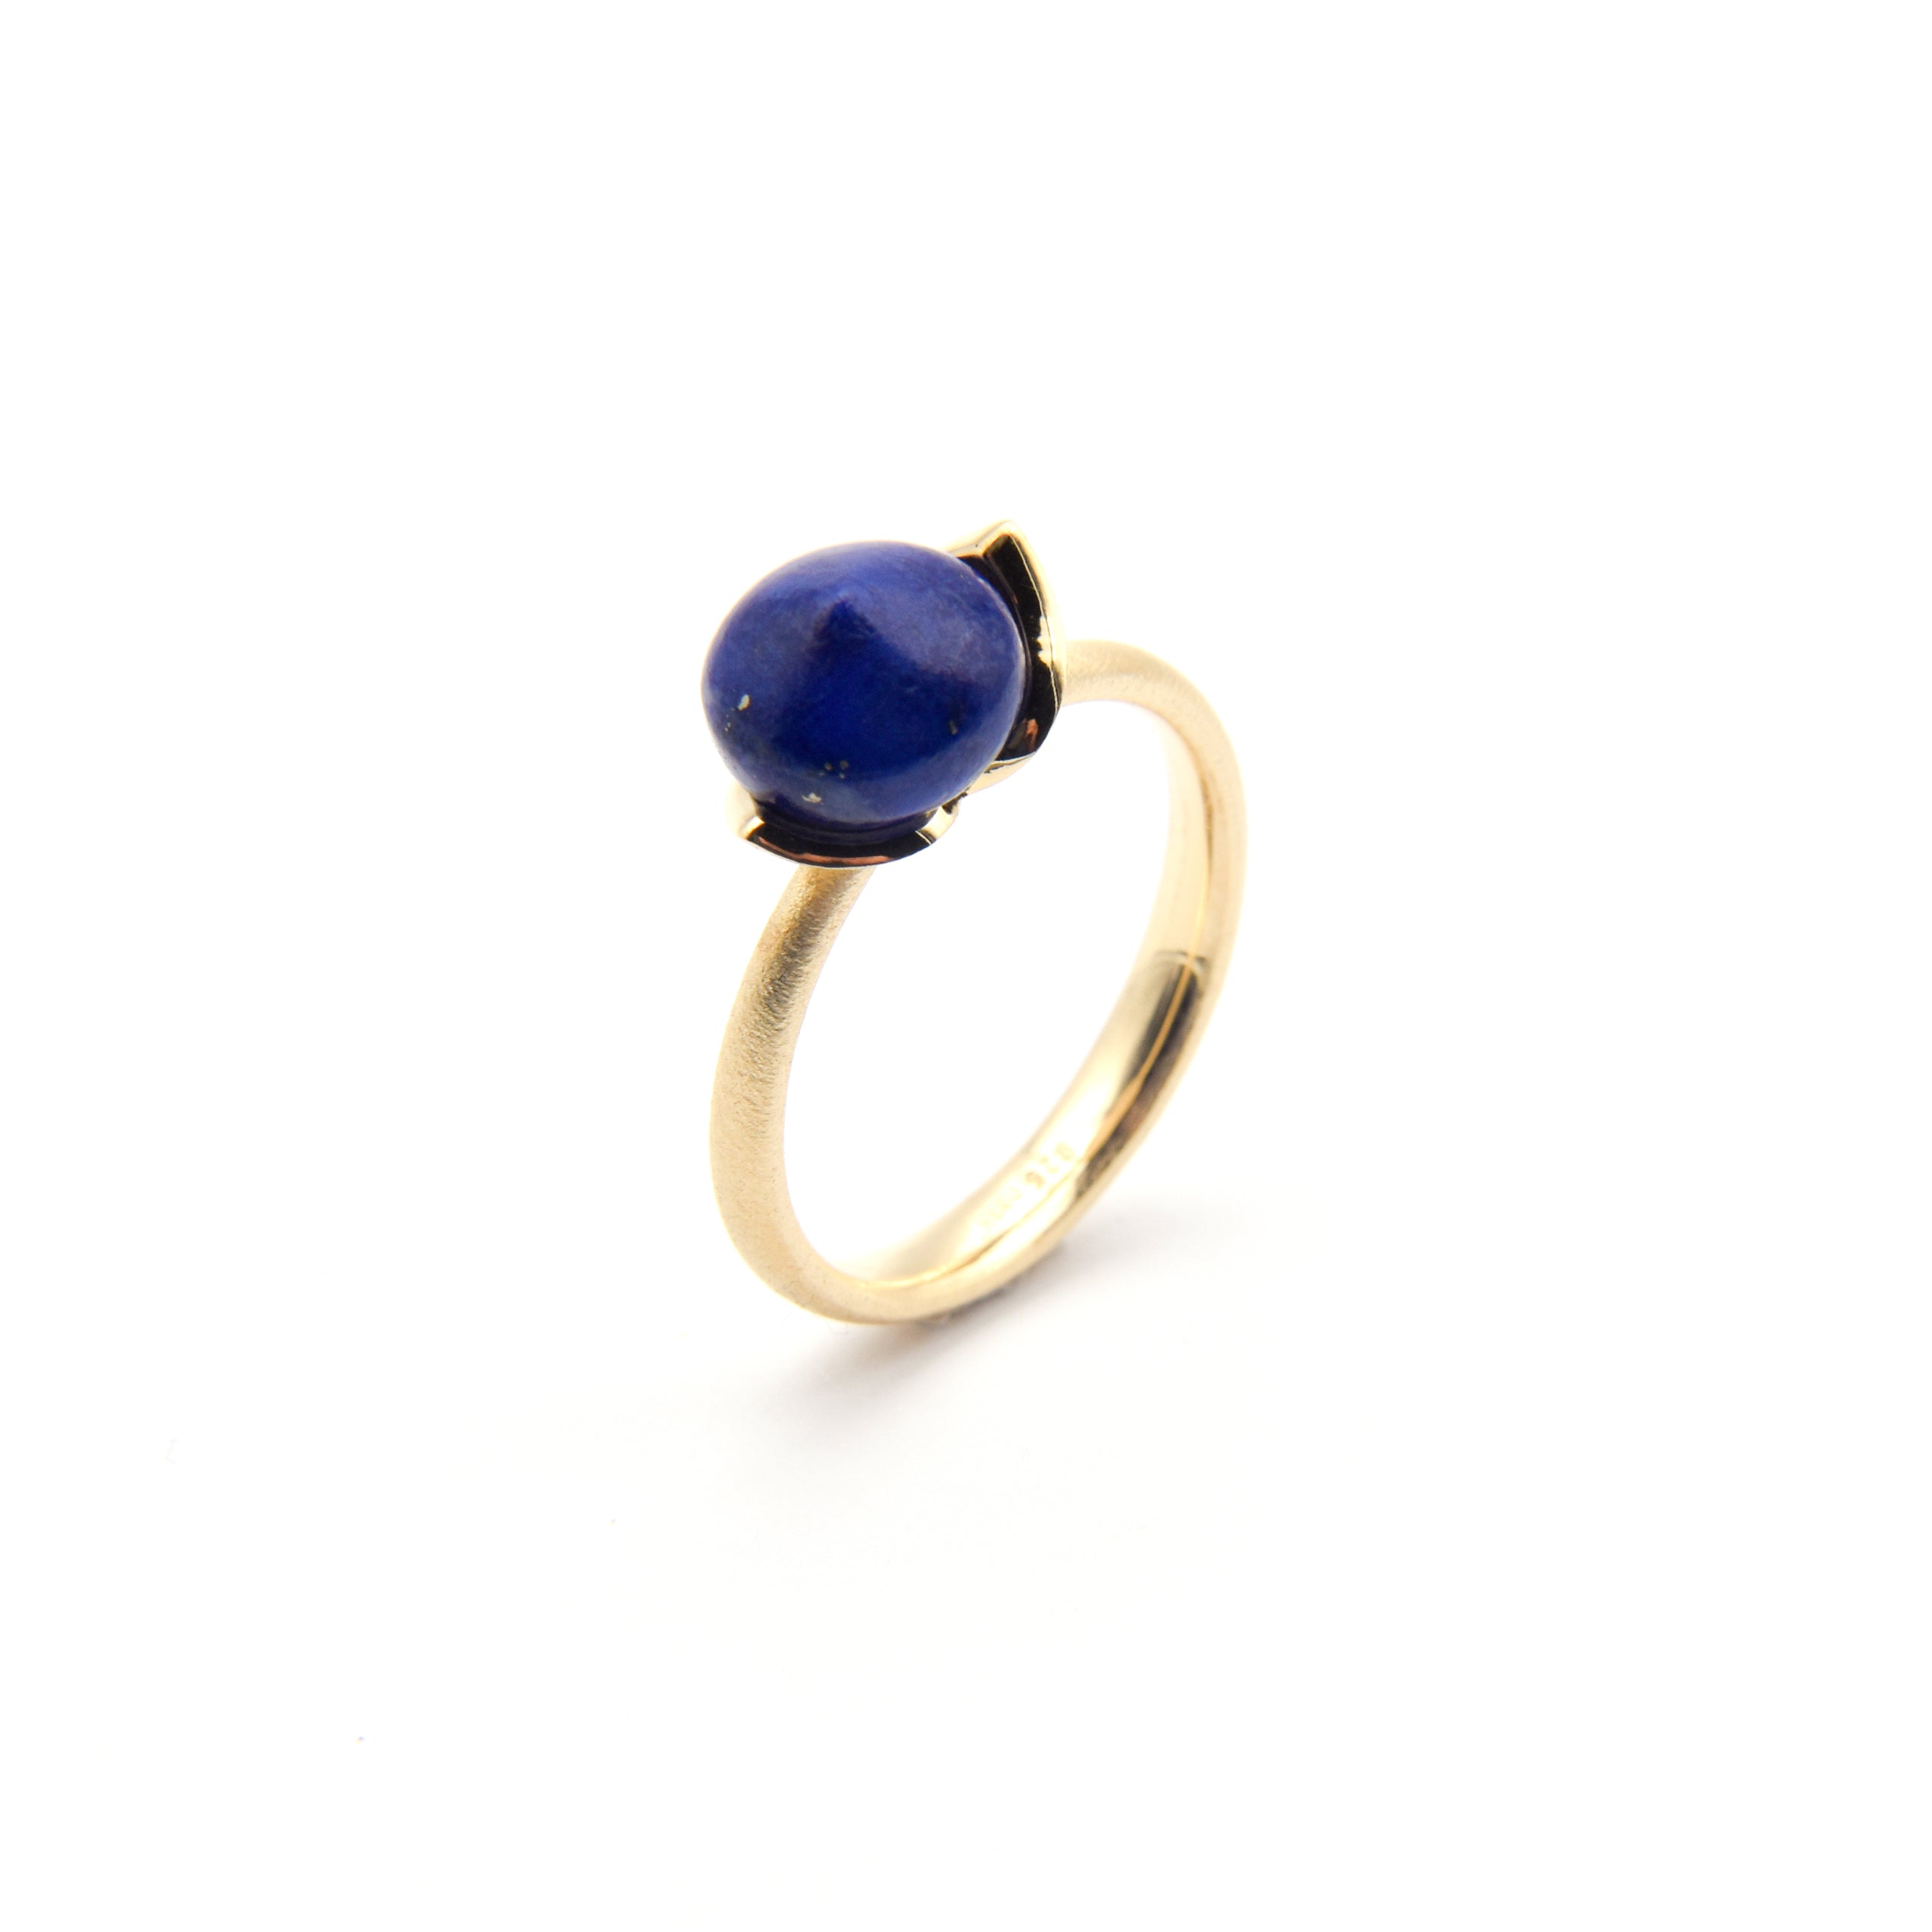 Dolce-ring "smal" med lapis lazuli 925/-